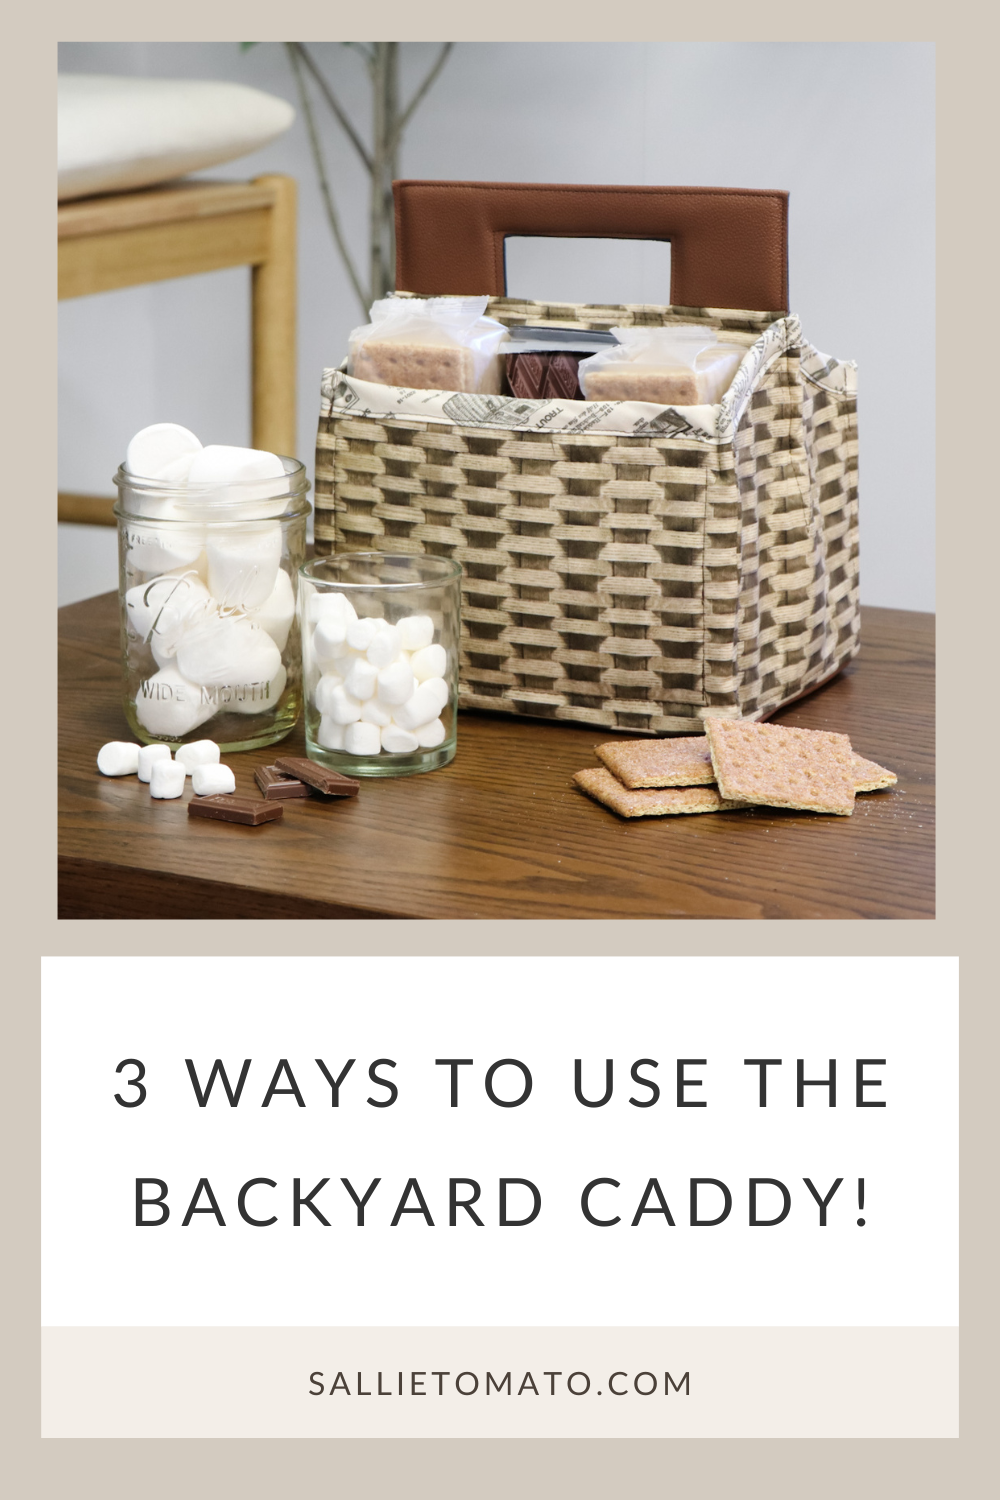 3 Ways to Use the Backyard Caddy!